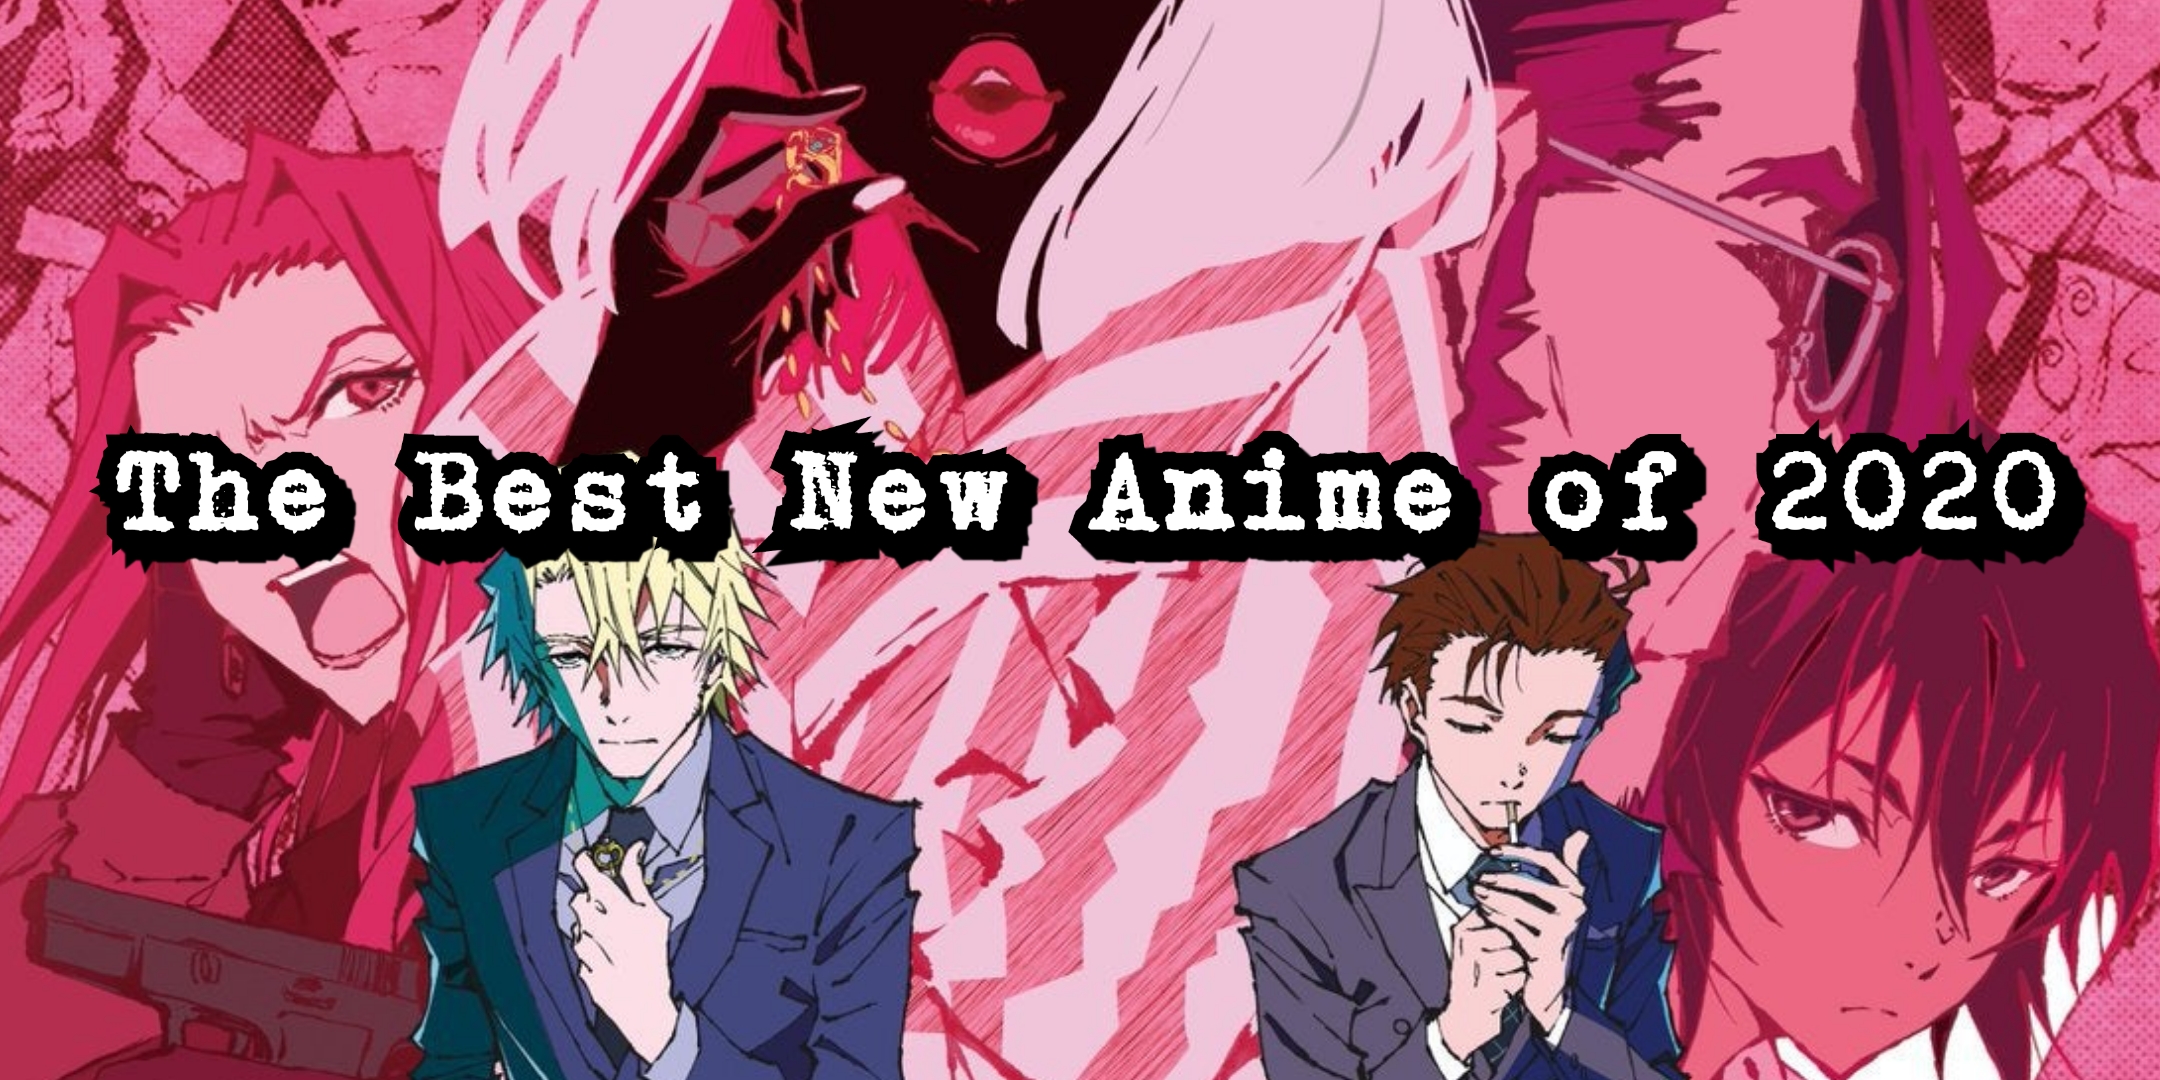 Kaho Shibuya's Best Animes of 2020